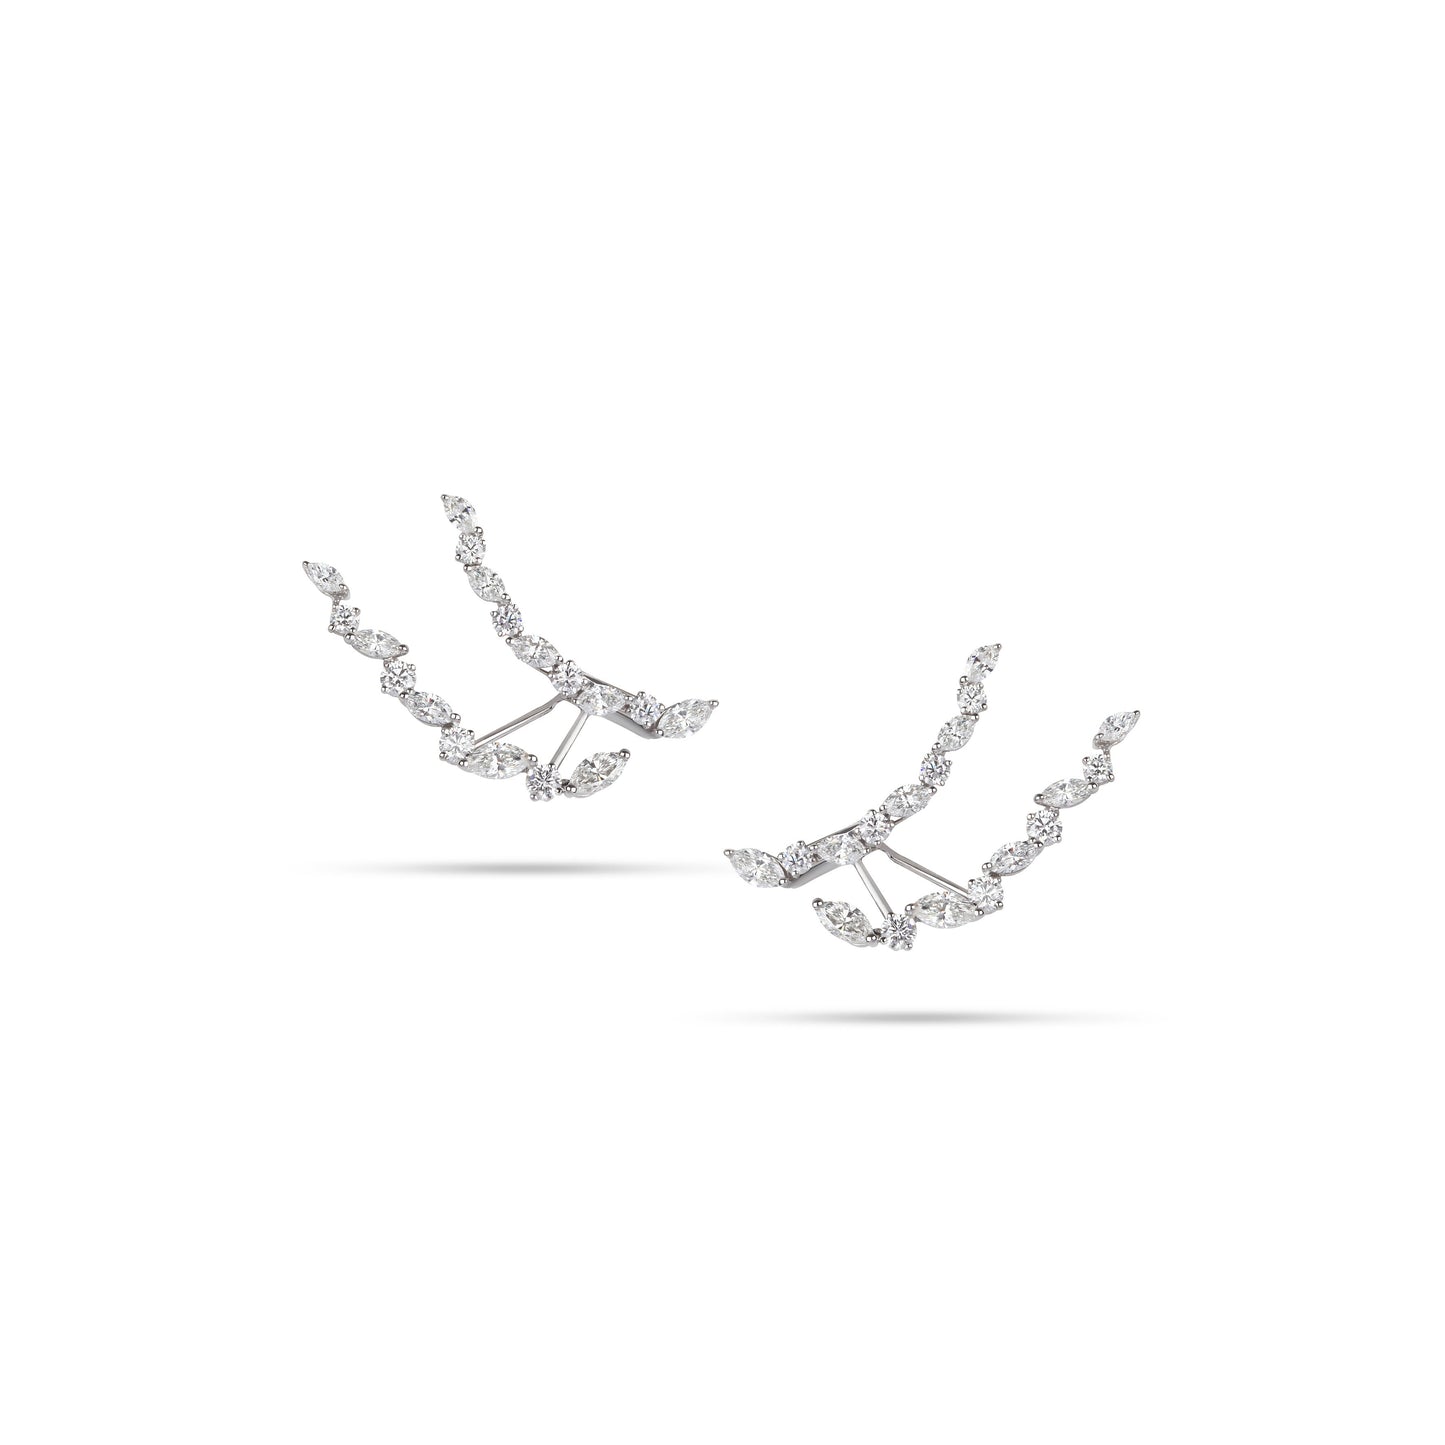 Two-Row Diamond Crawler Earrings